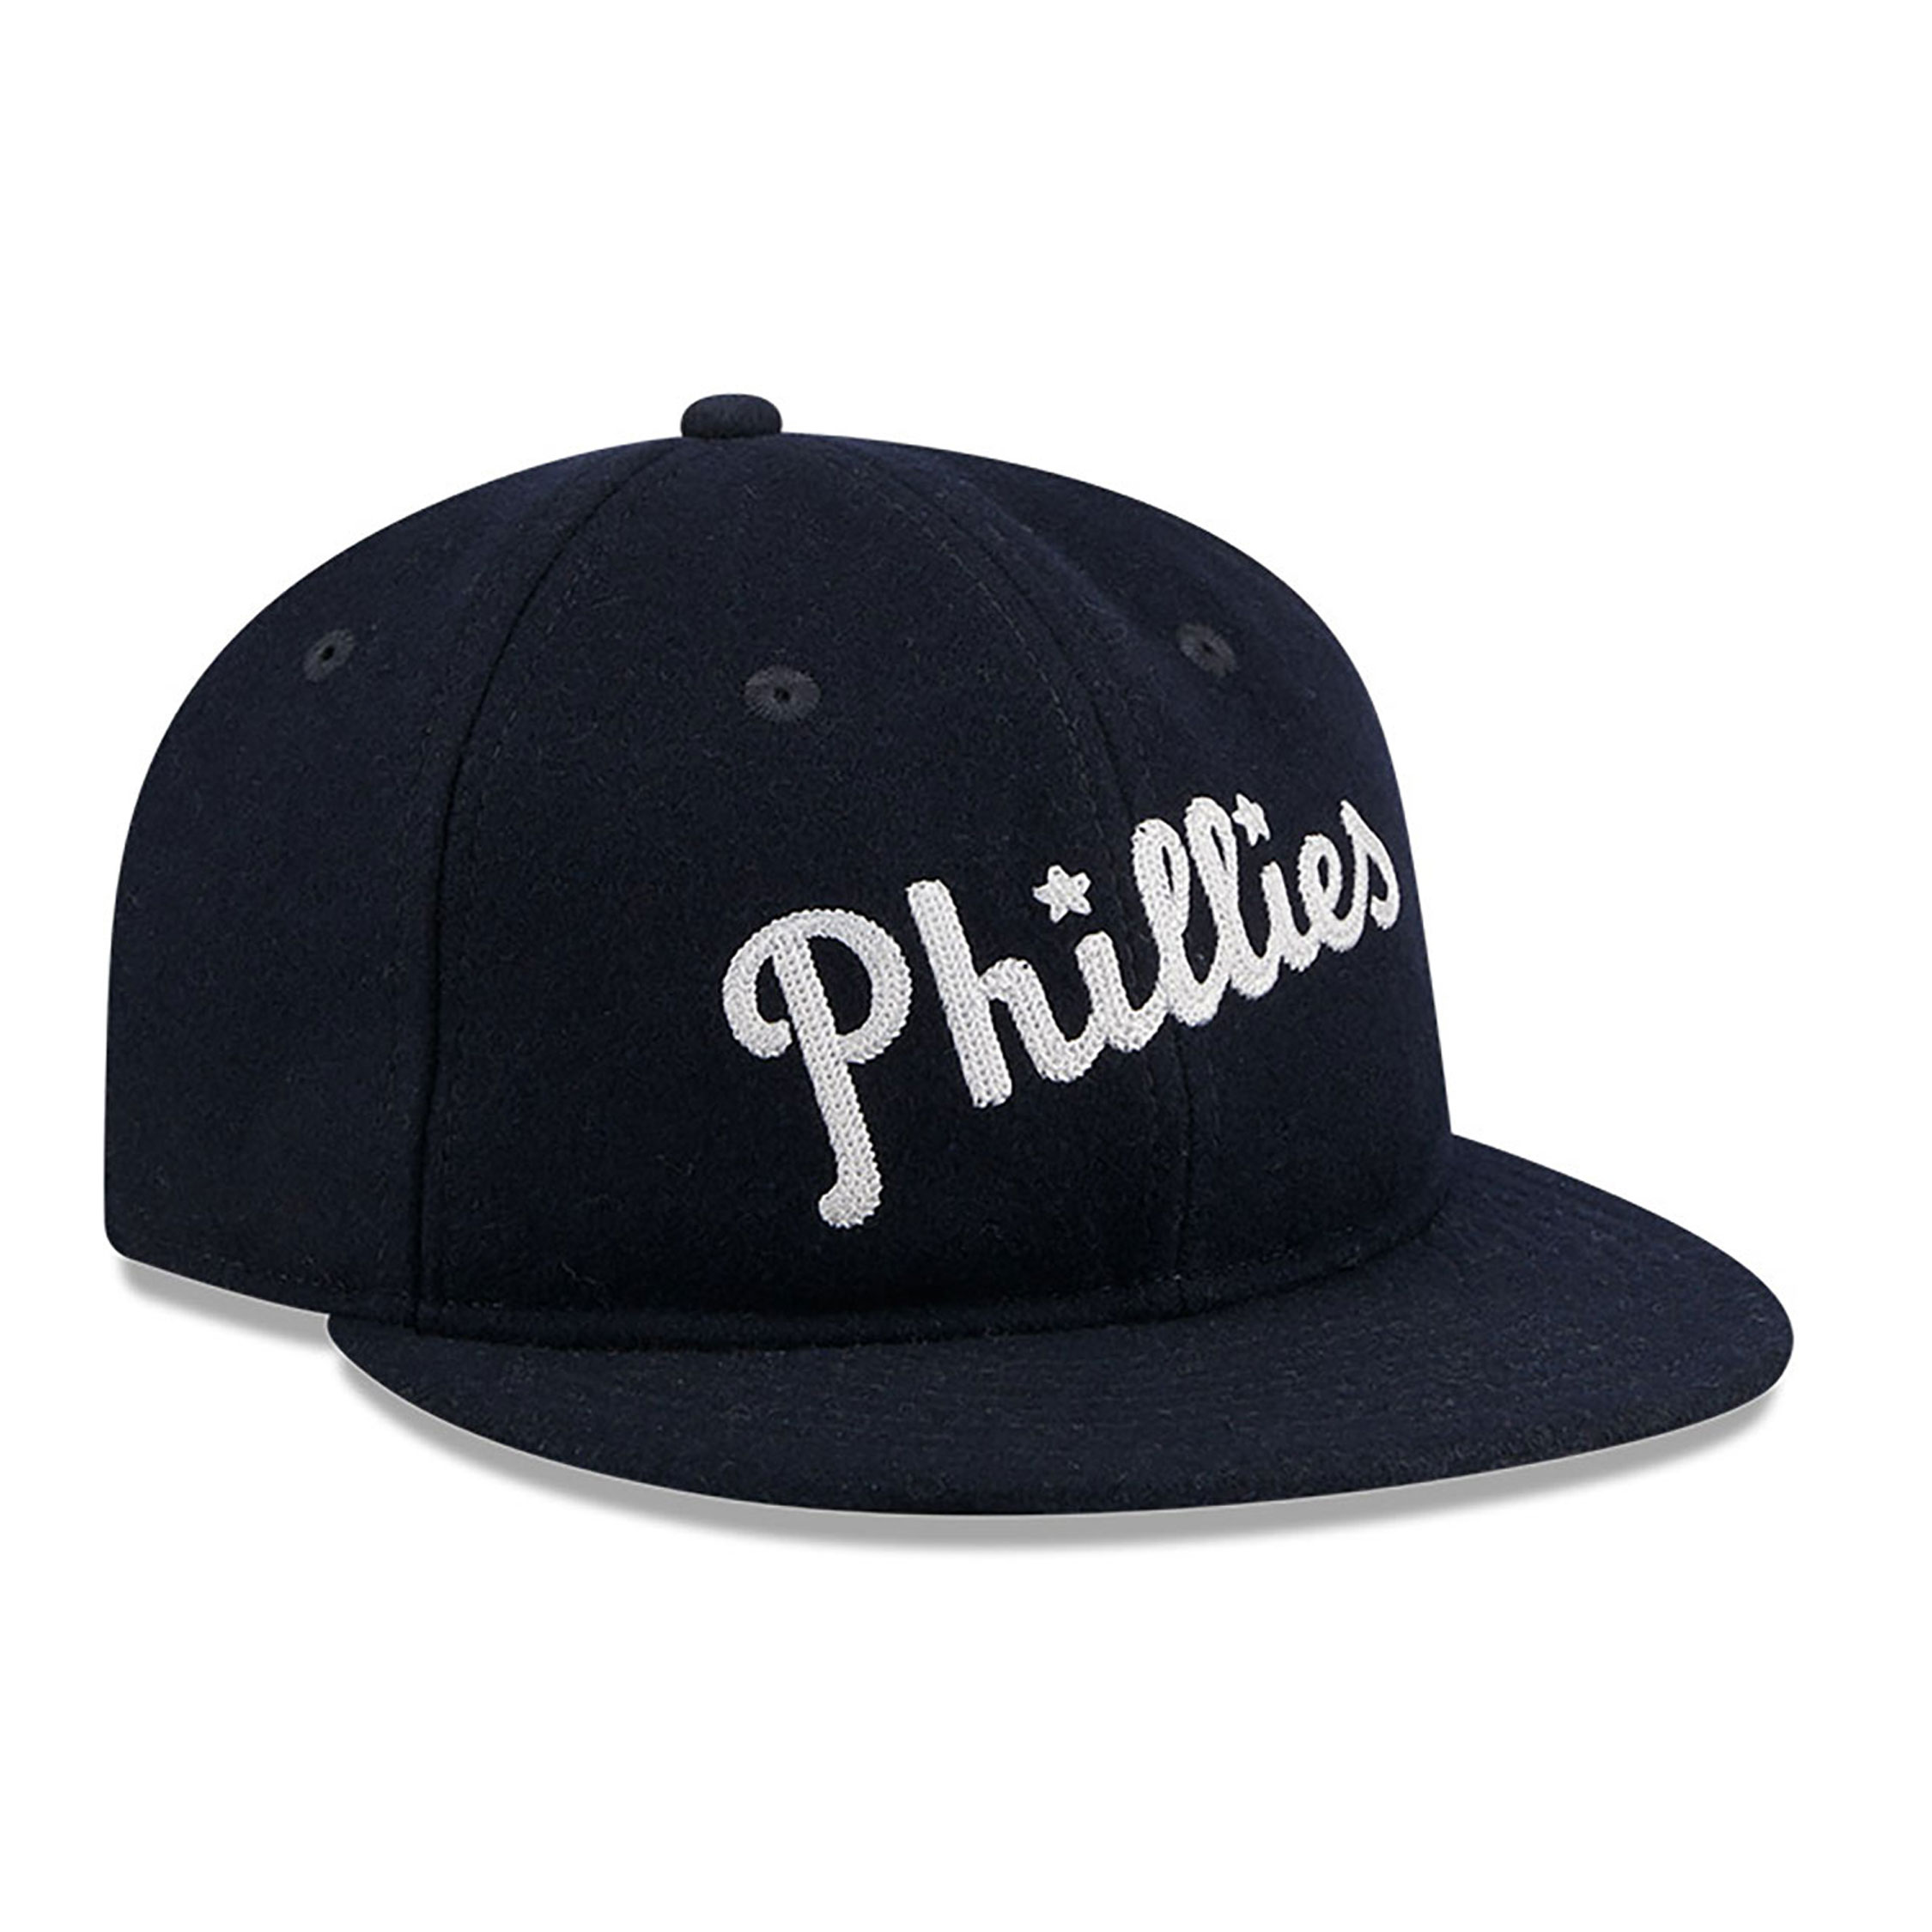 Philadelphia Phillies Melton Wool Navy Retro Crown 9FIFTY Strapback Cap